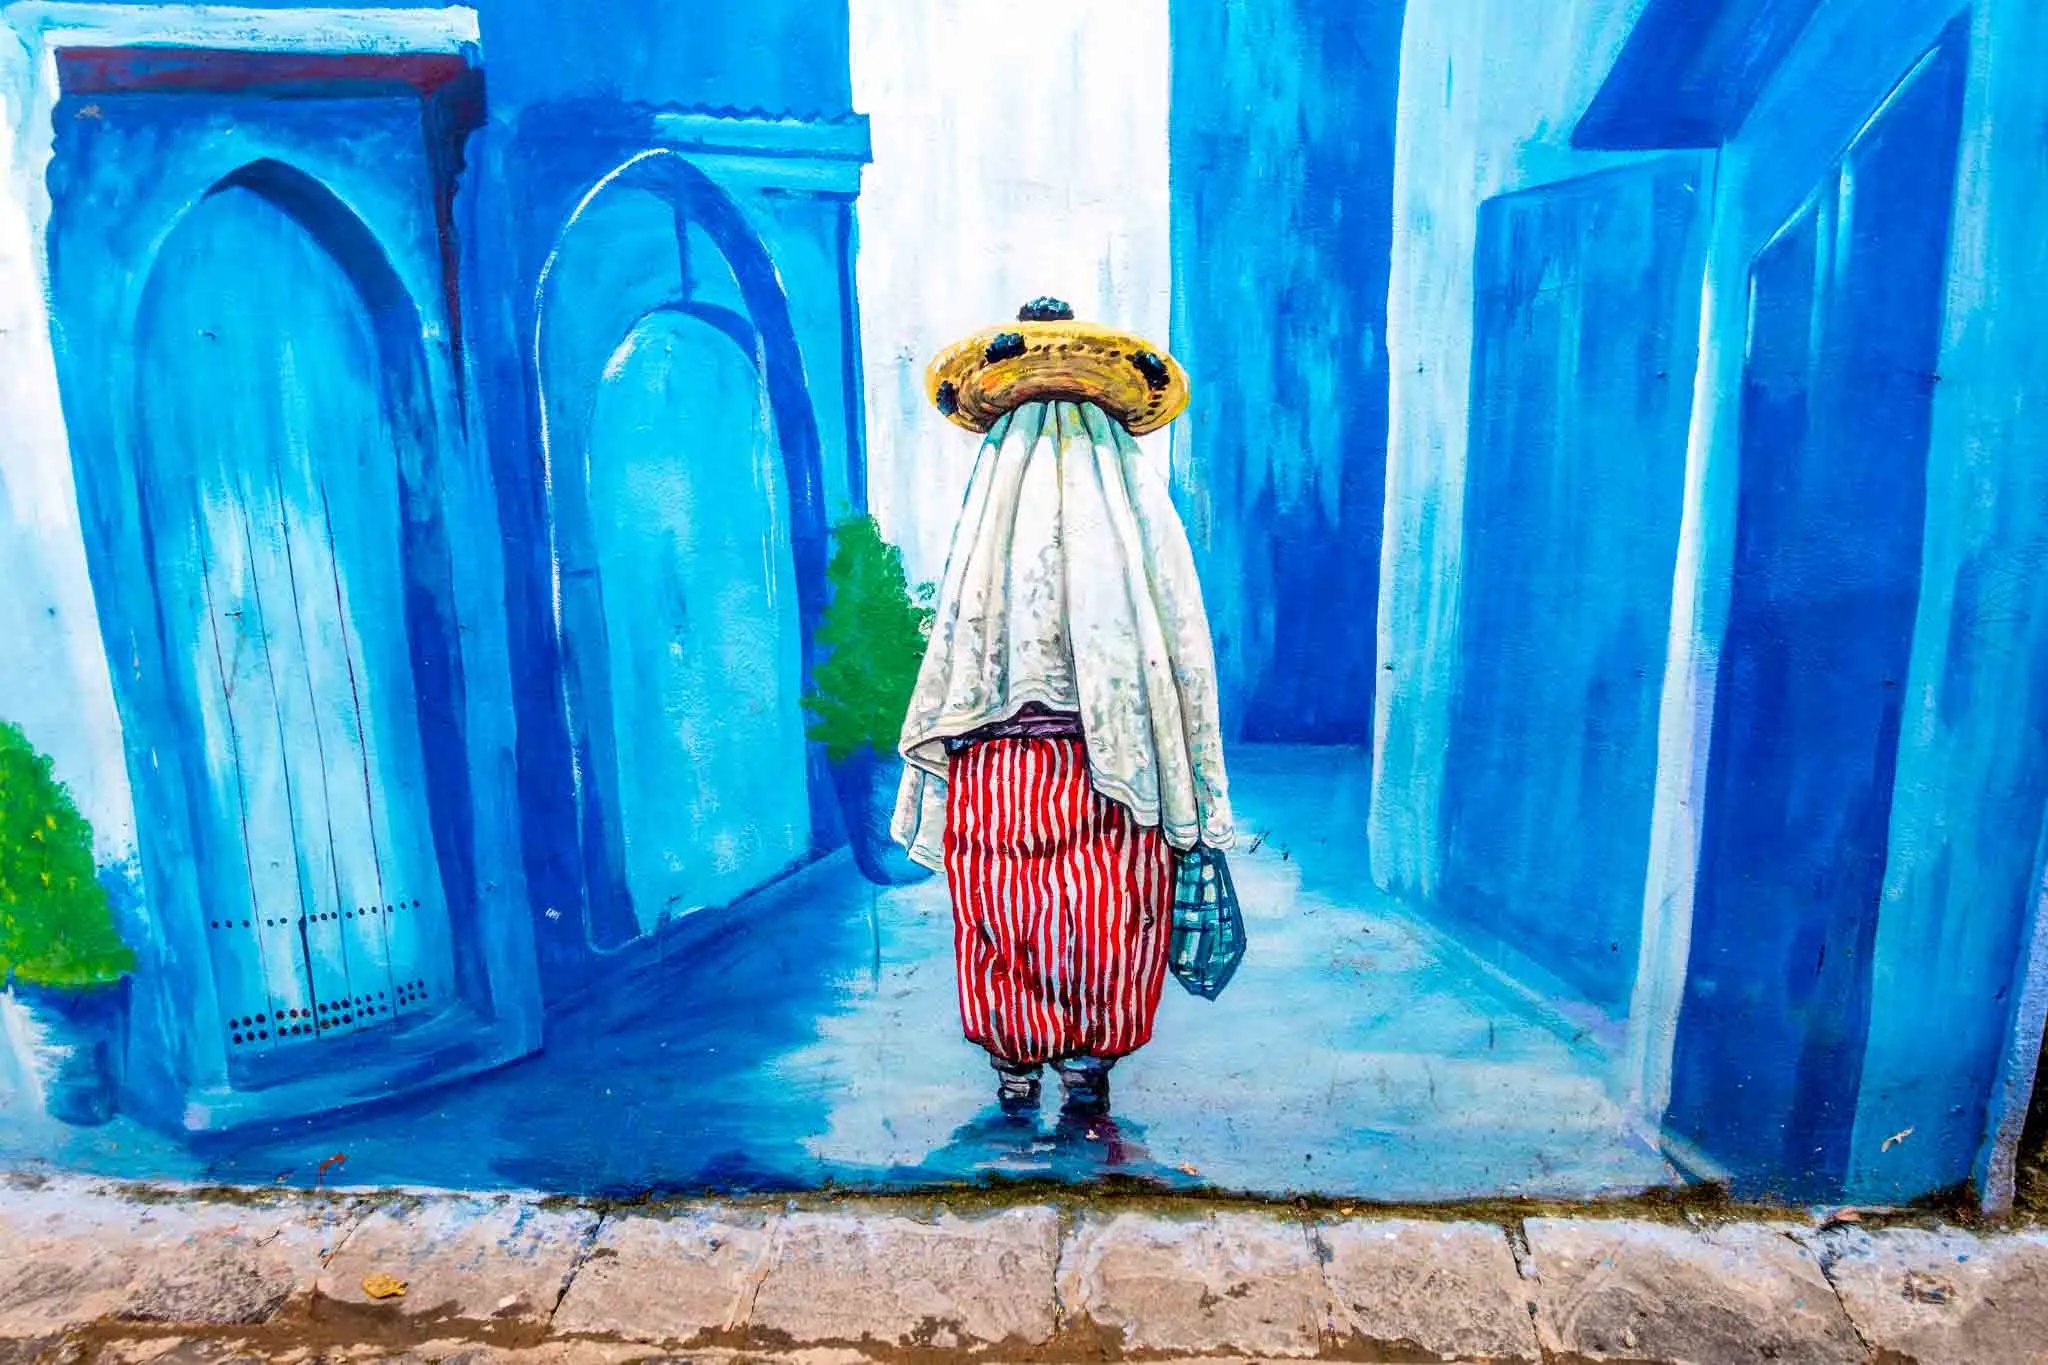 Street art mural of veiled woman.